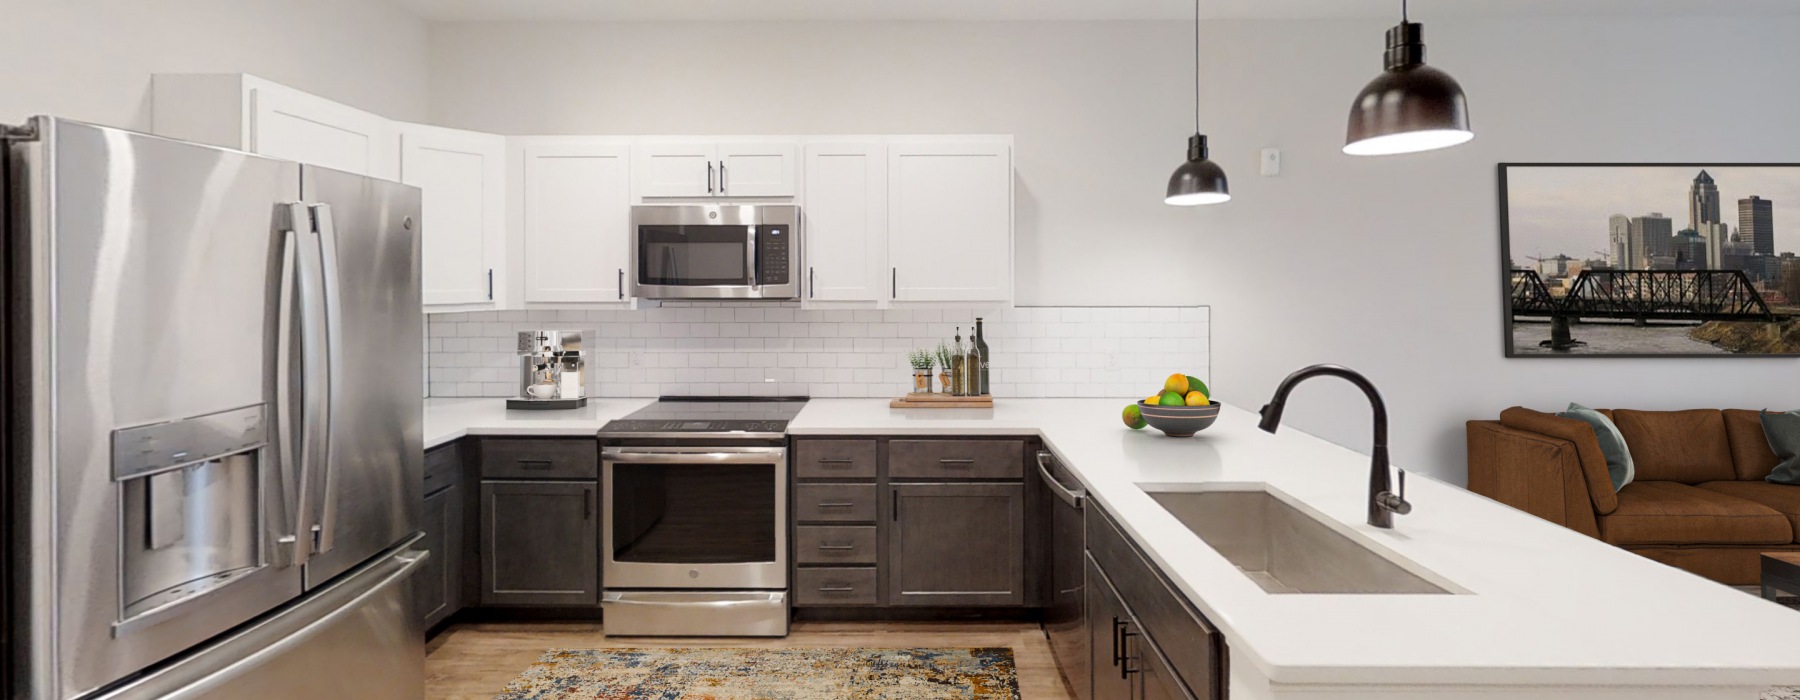 Modern apartment kitchen with quartz countertops